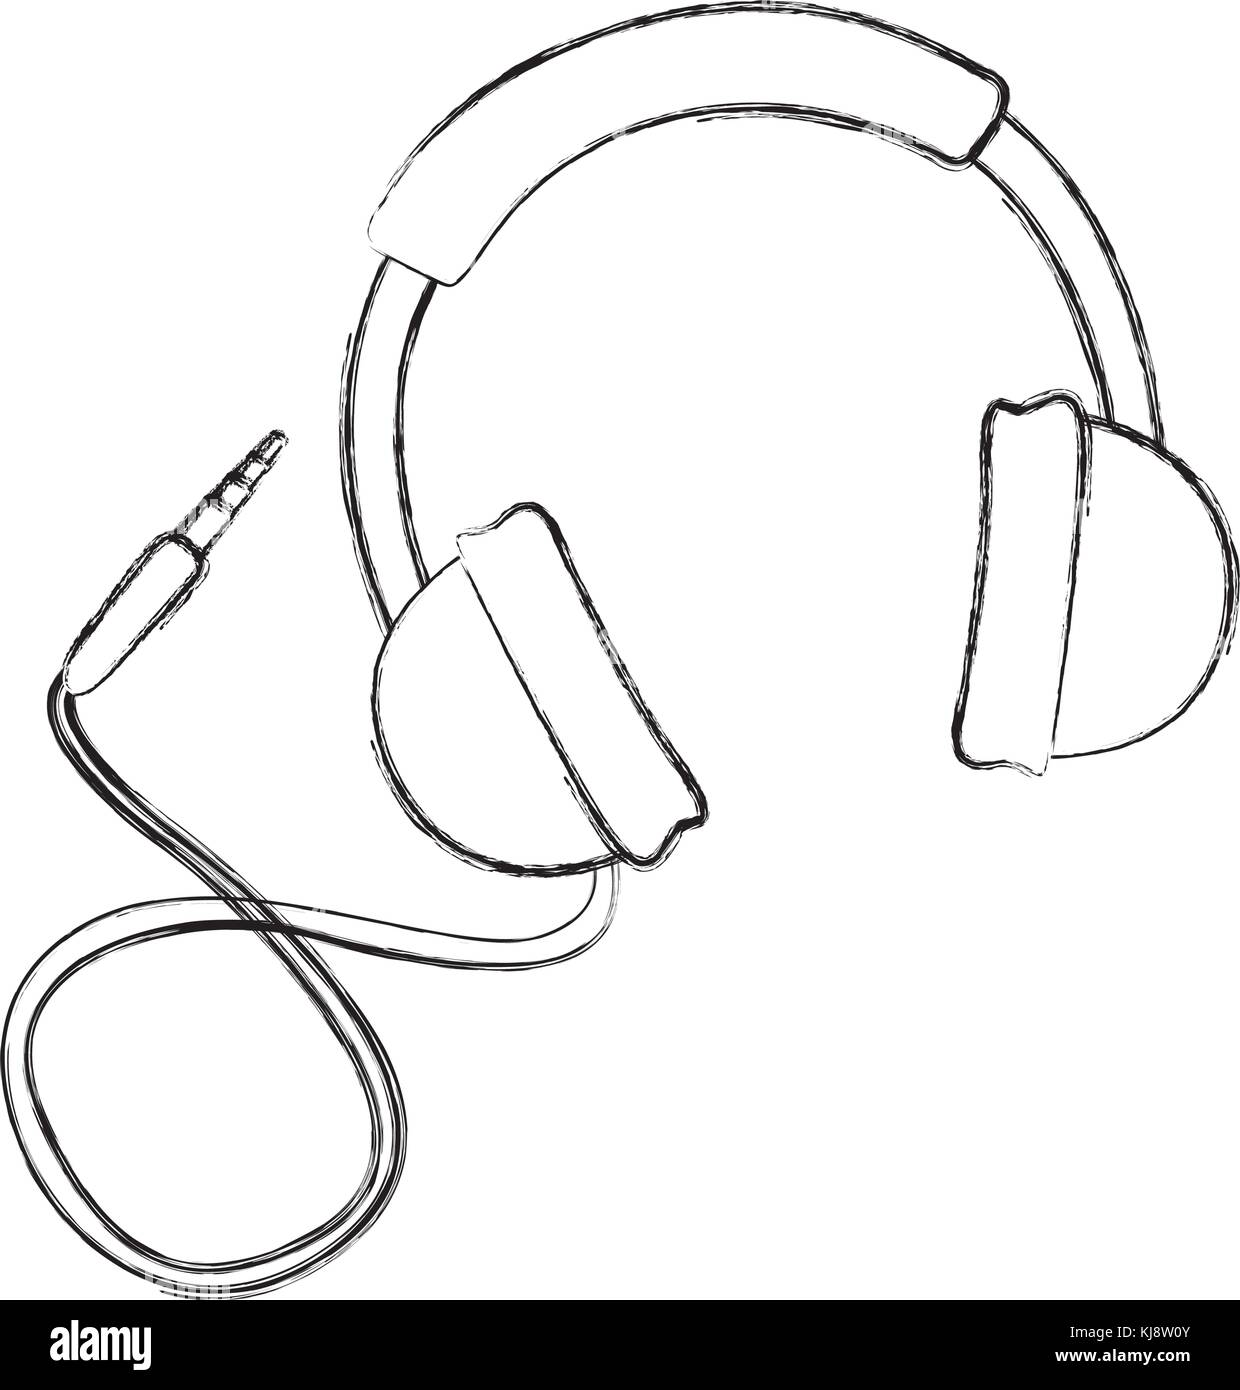 Skizze zeichnen Kopfhörer Cartoon Stock-Vektorgrafik - Alamy